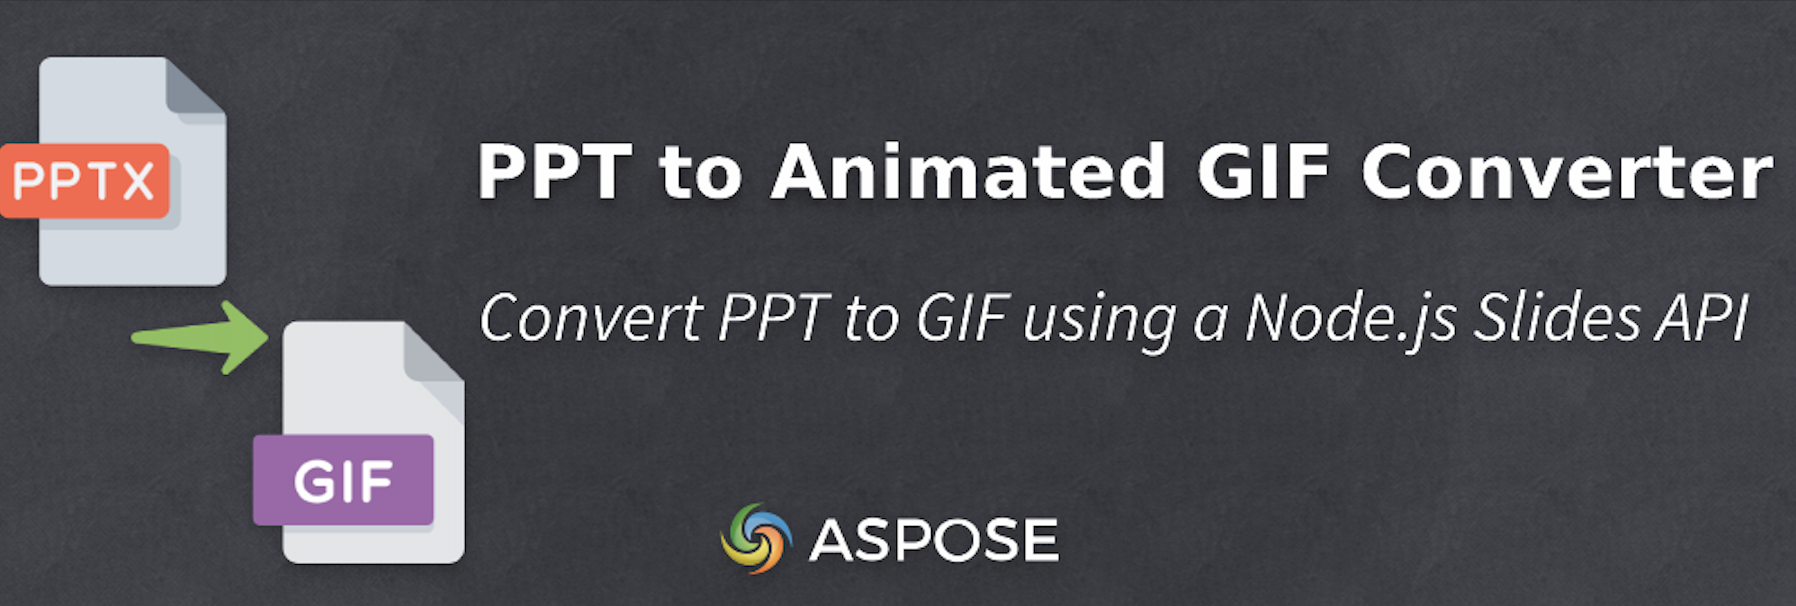 Convert PPT to GIF using a Node.js Slides API